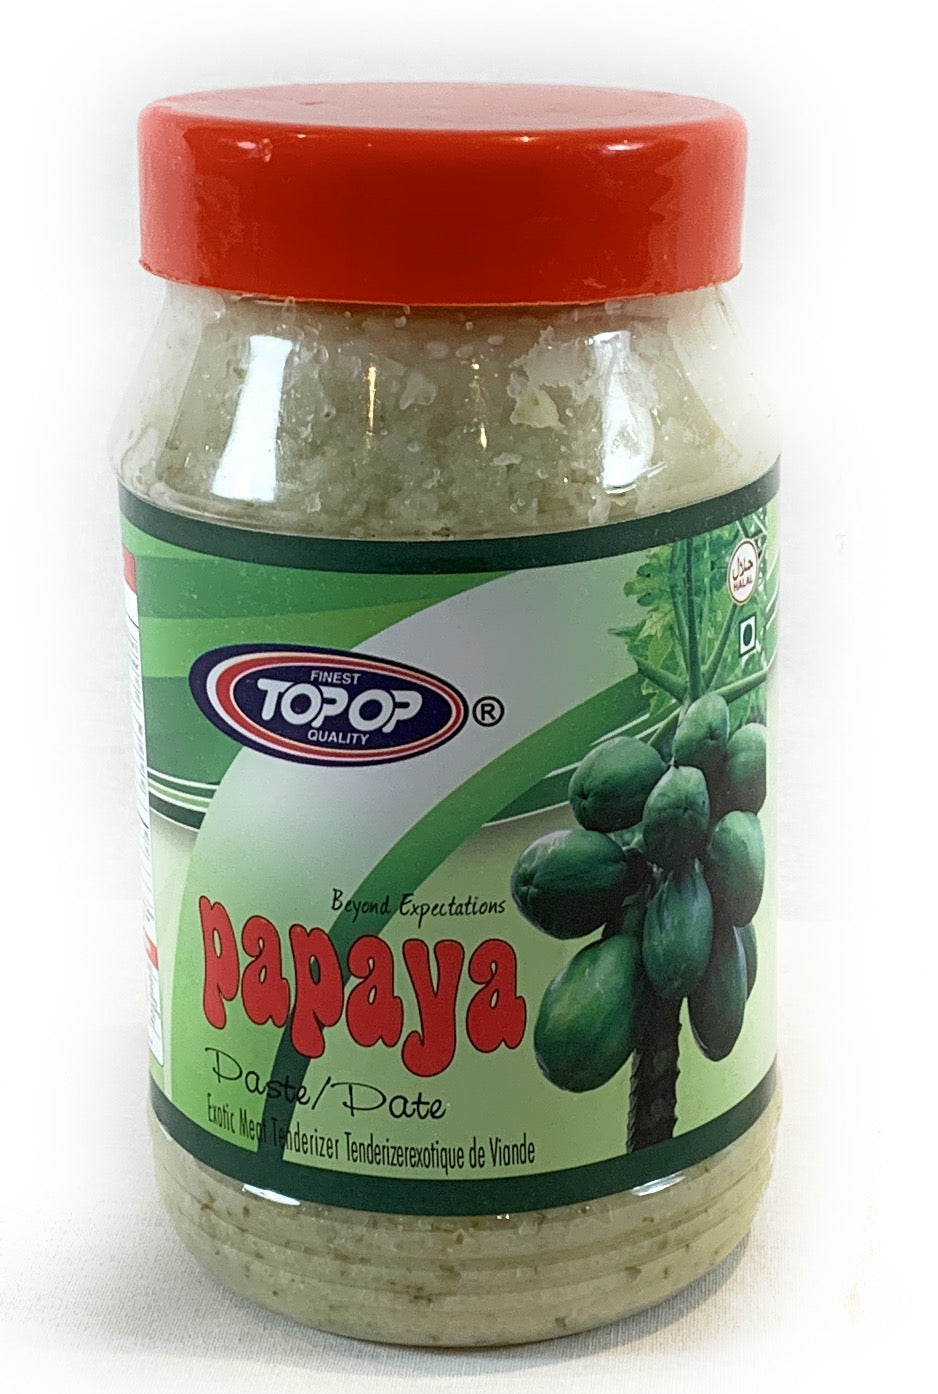 Top-op Papaya Paste 300g